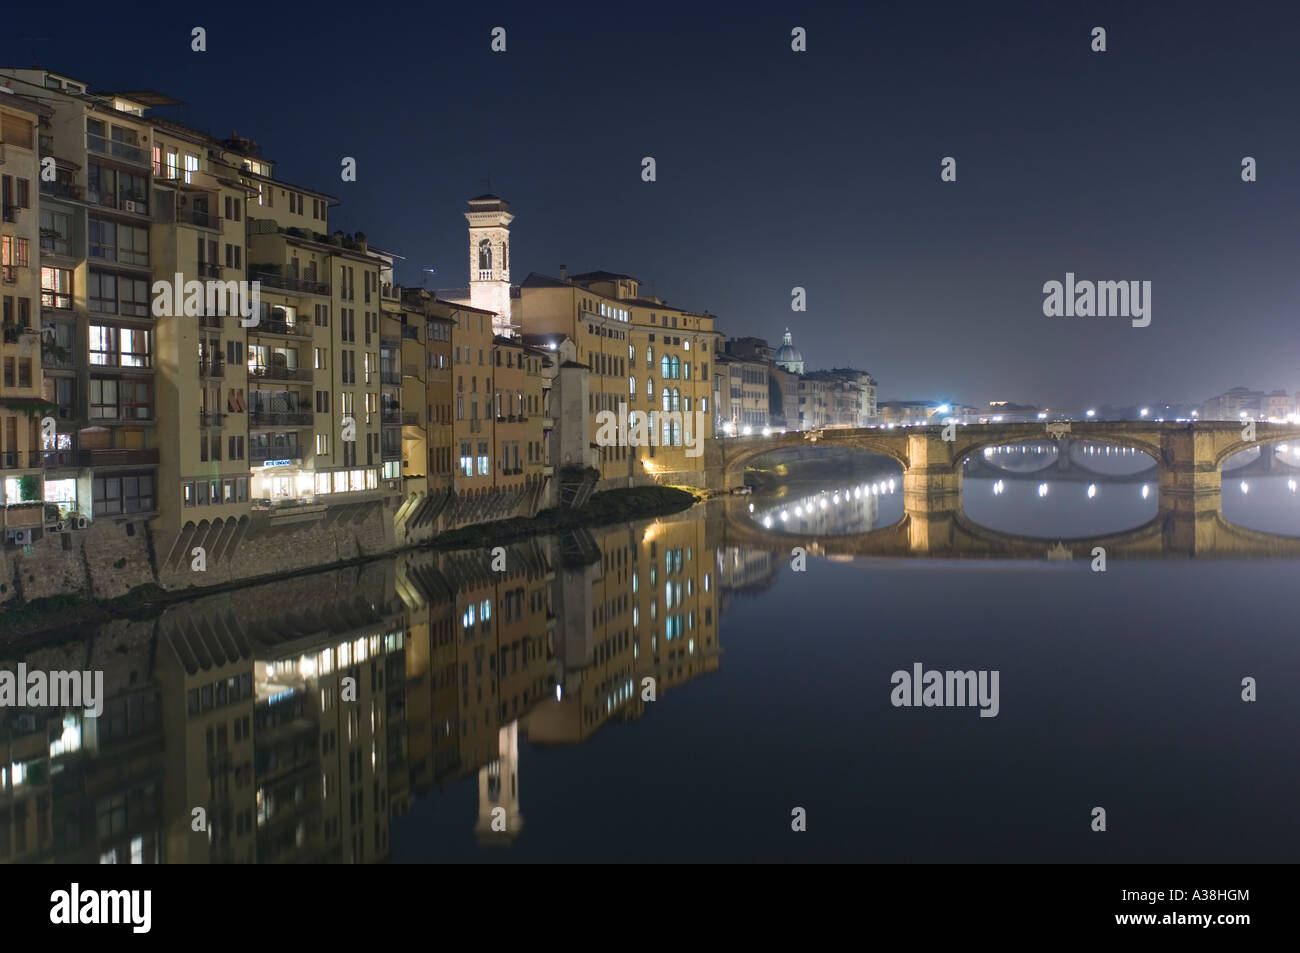 A view of the Ponte Santa Trinita (bridge) and buildings along Borgo San Jacopo reflected in the Arno river at night. Stock Photo